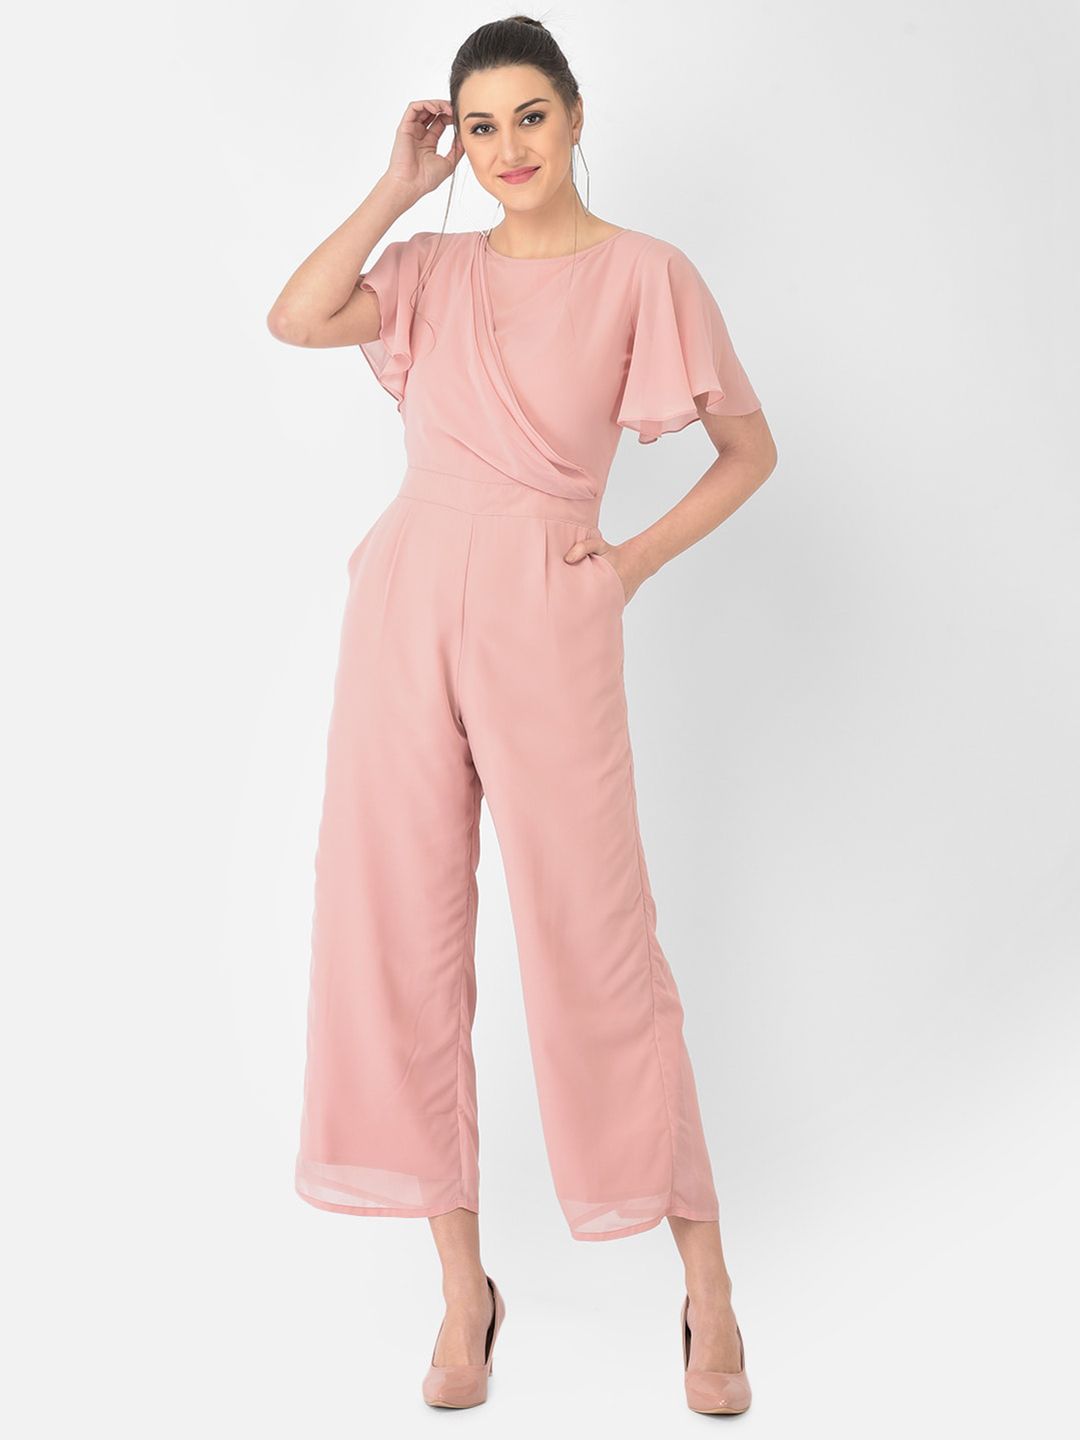 Eavan Pink Solid Draped Basic Jumpsuit Price in India